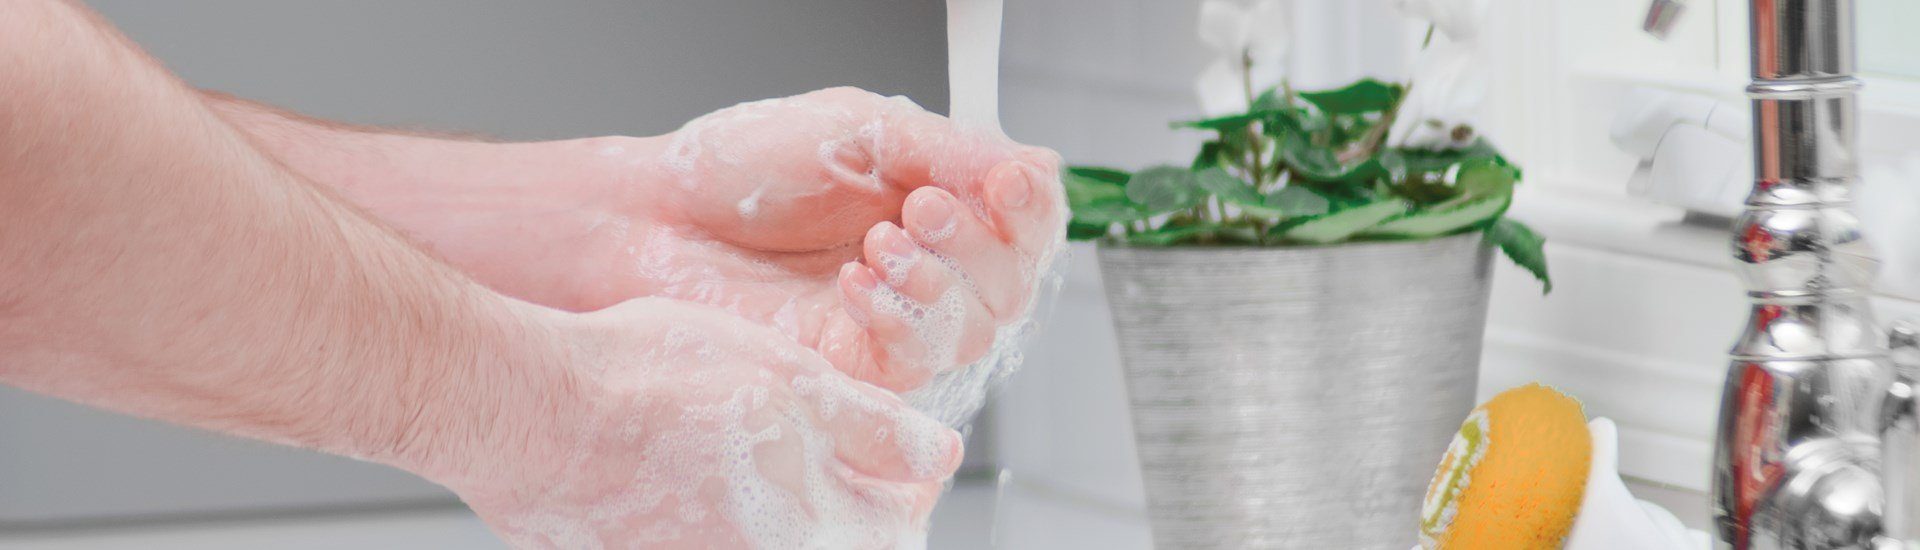 sterilisateur-uv-lavage-des-mains-anti-virus-hygiene-parfaite